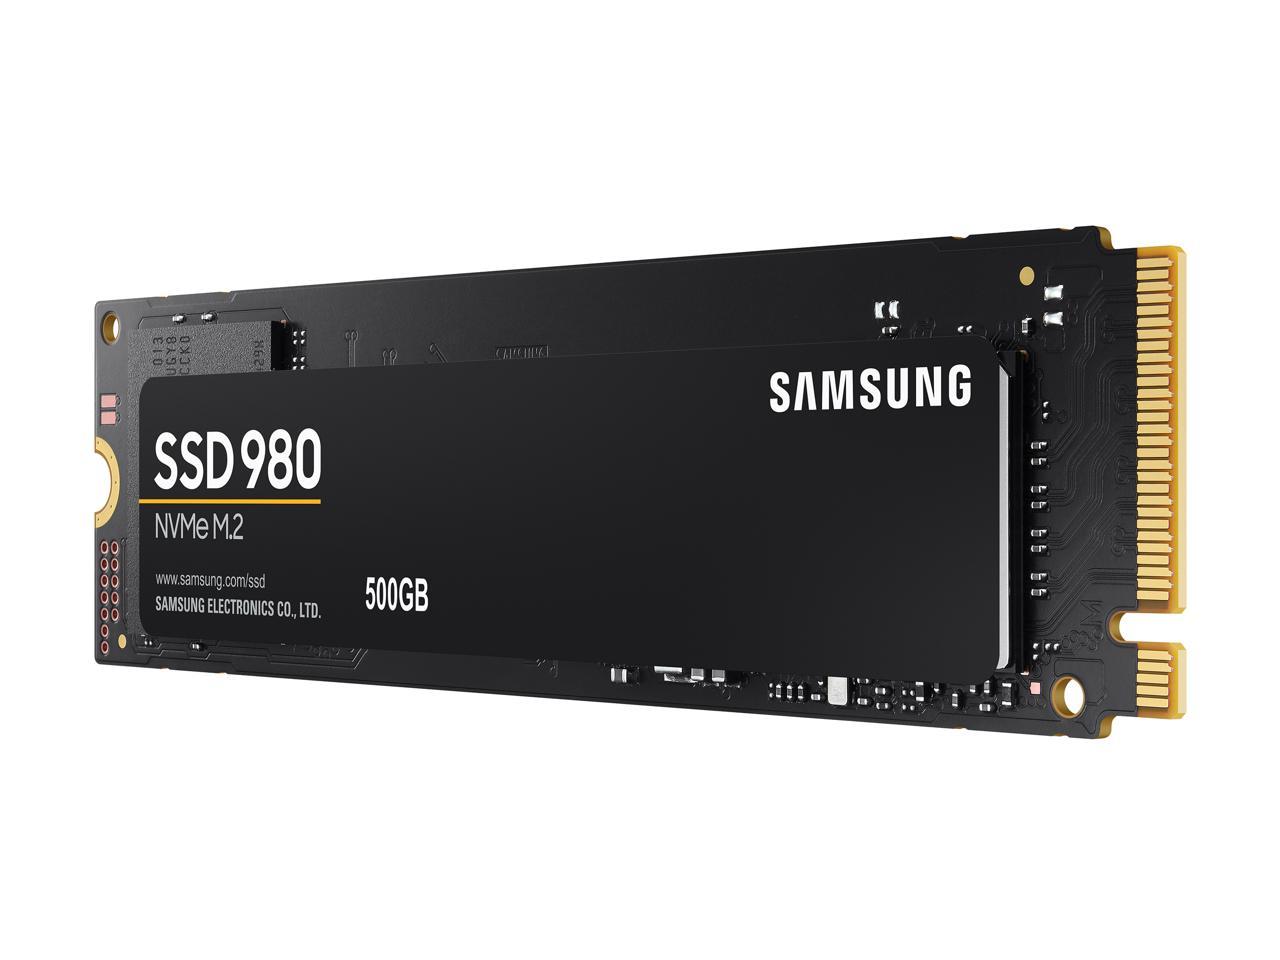 500GB Samsung 980 NVMe SSD $66